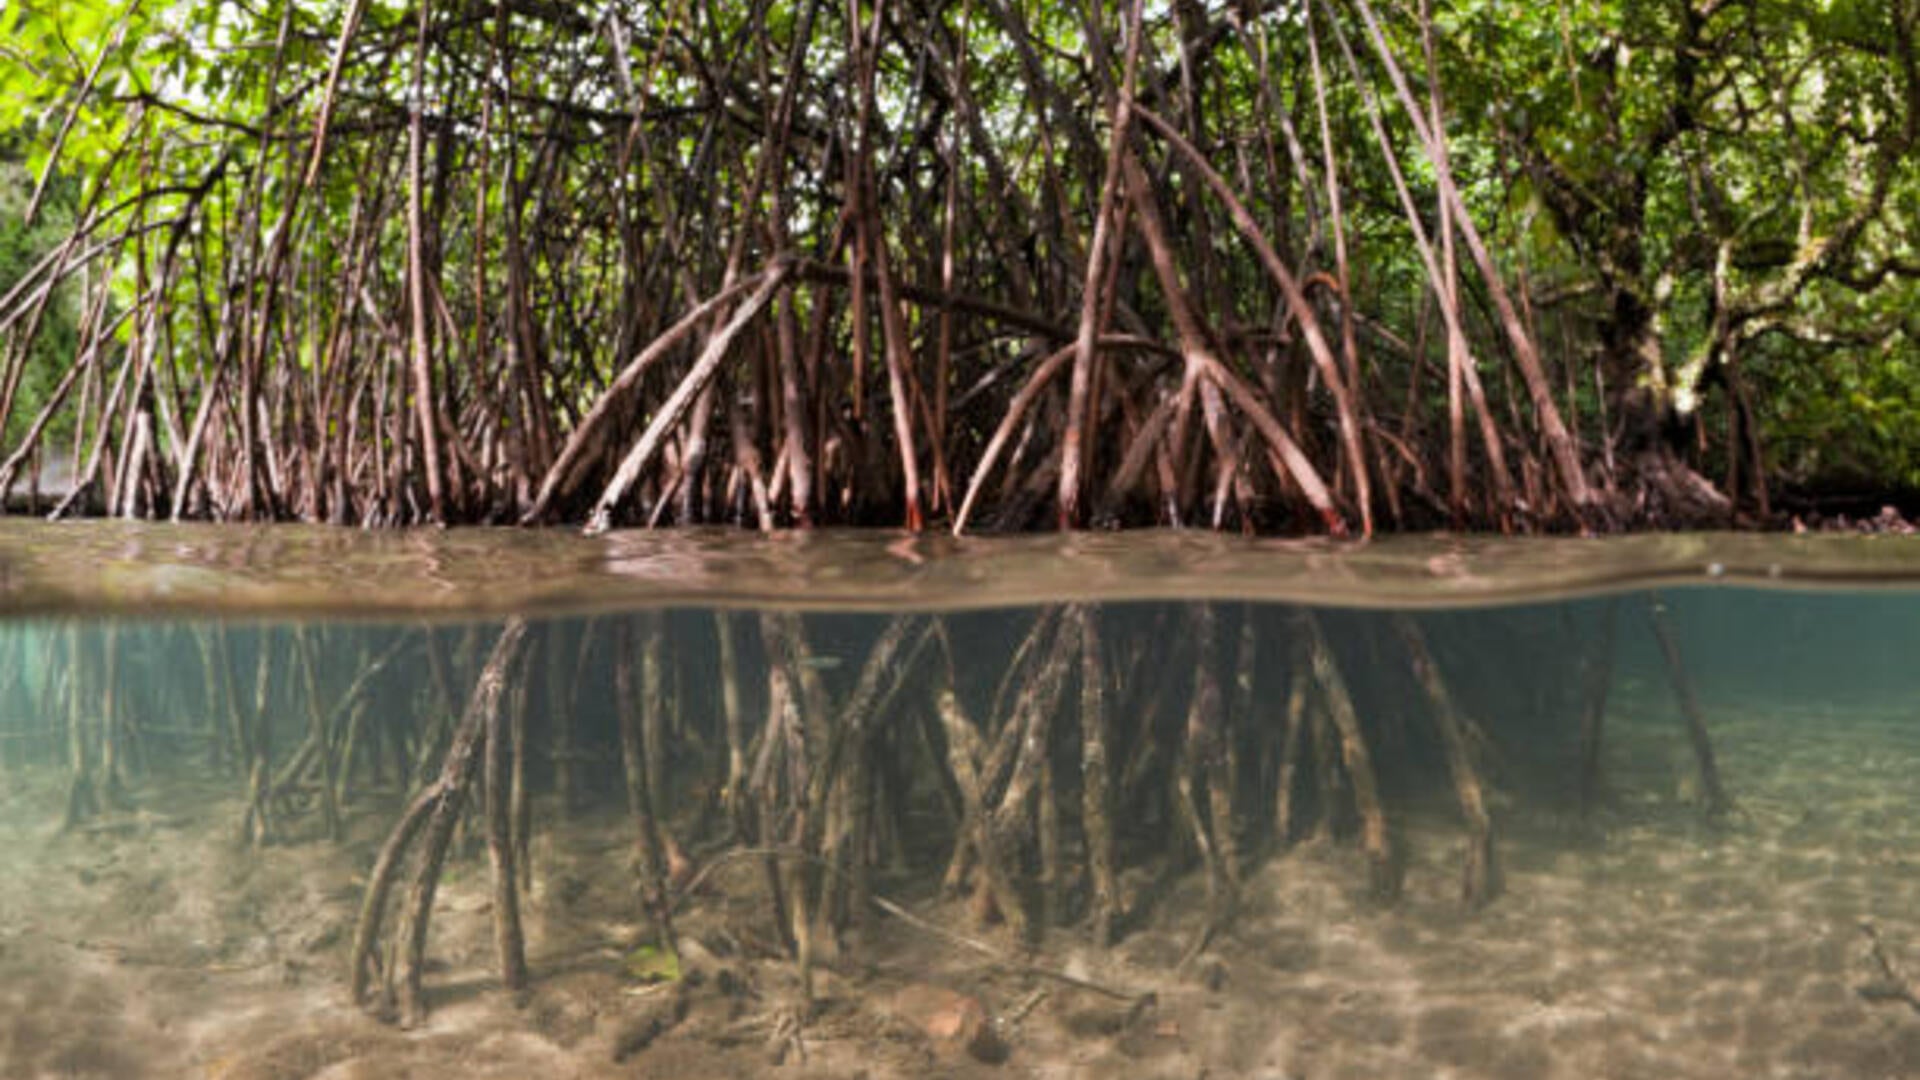 Image of mangrove trees